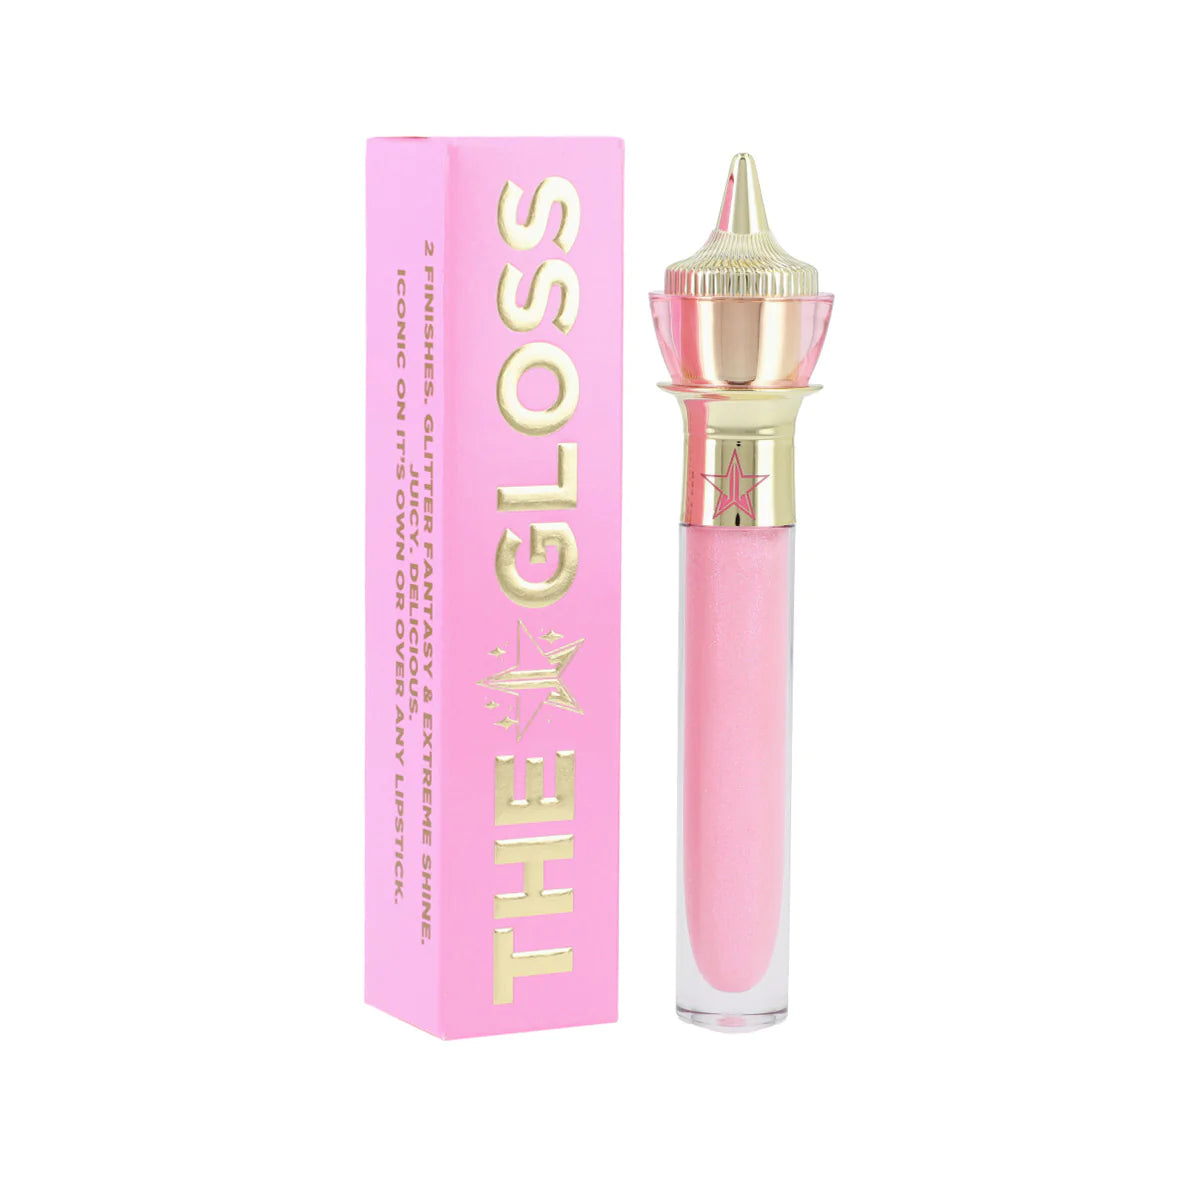 The Gloss Candy drip Jeffree Stars Cosmetics